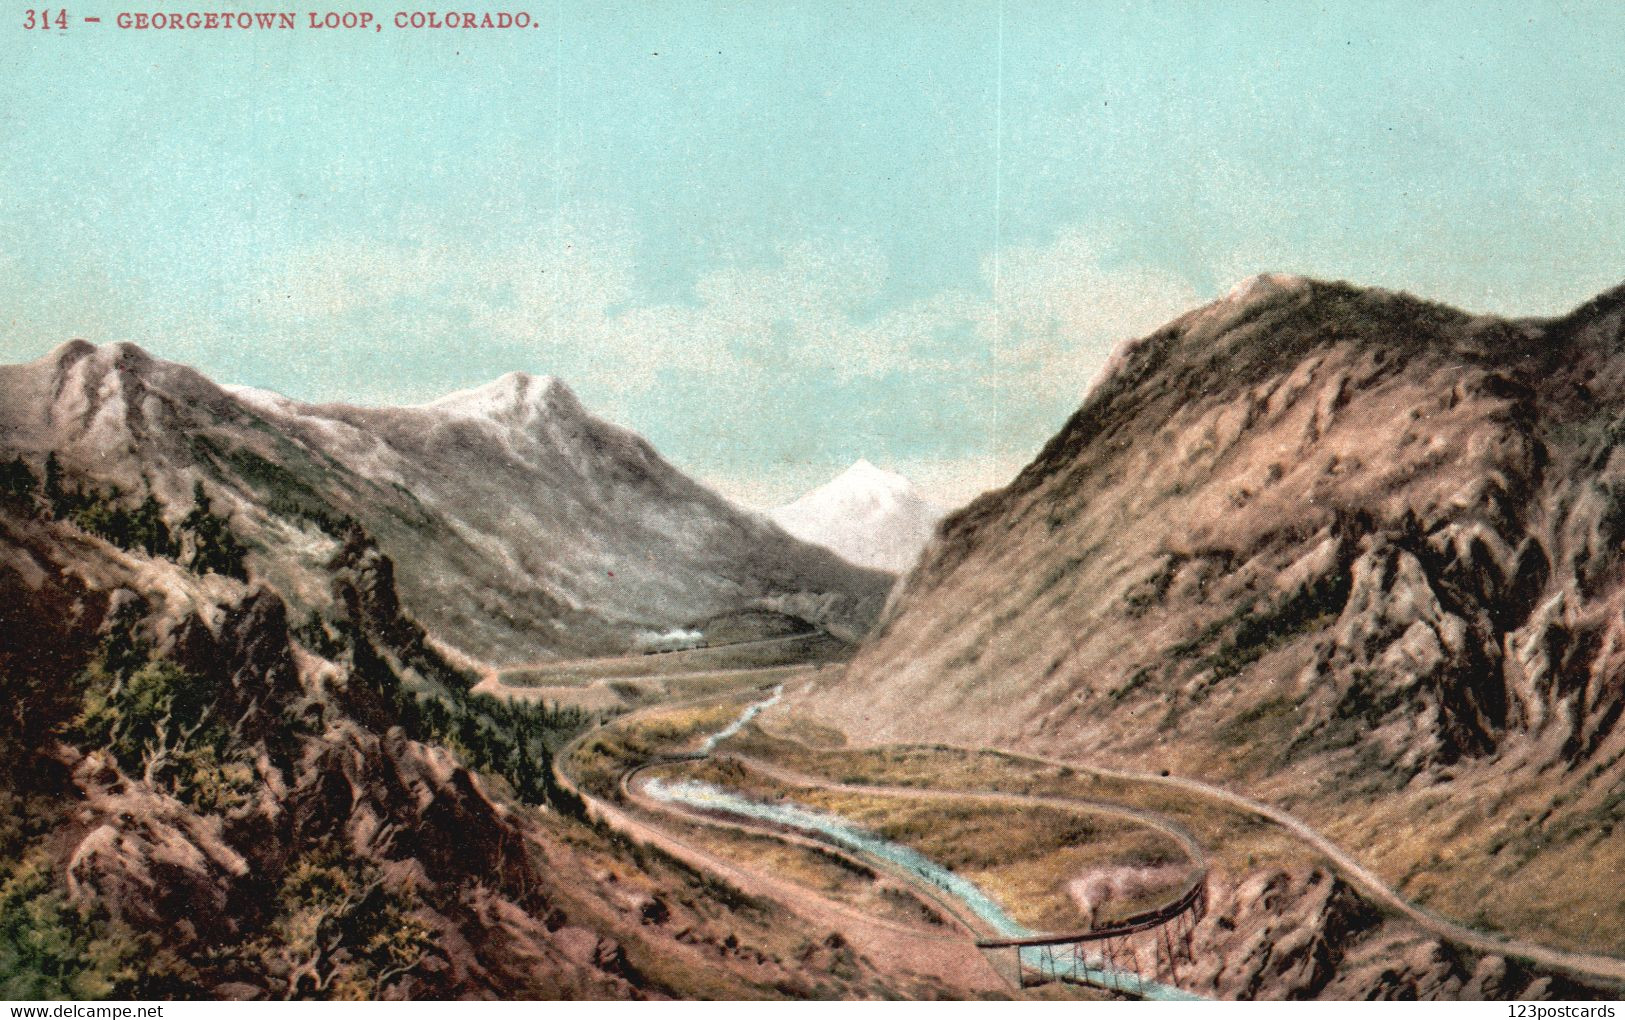 Georgetown Loop, Colorado - Rocky Mountains